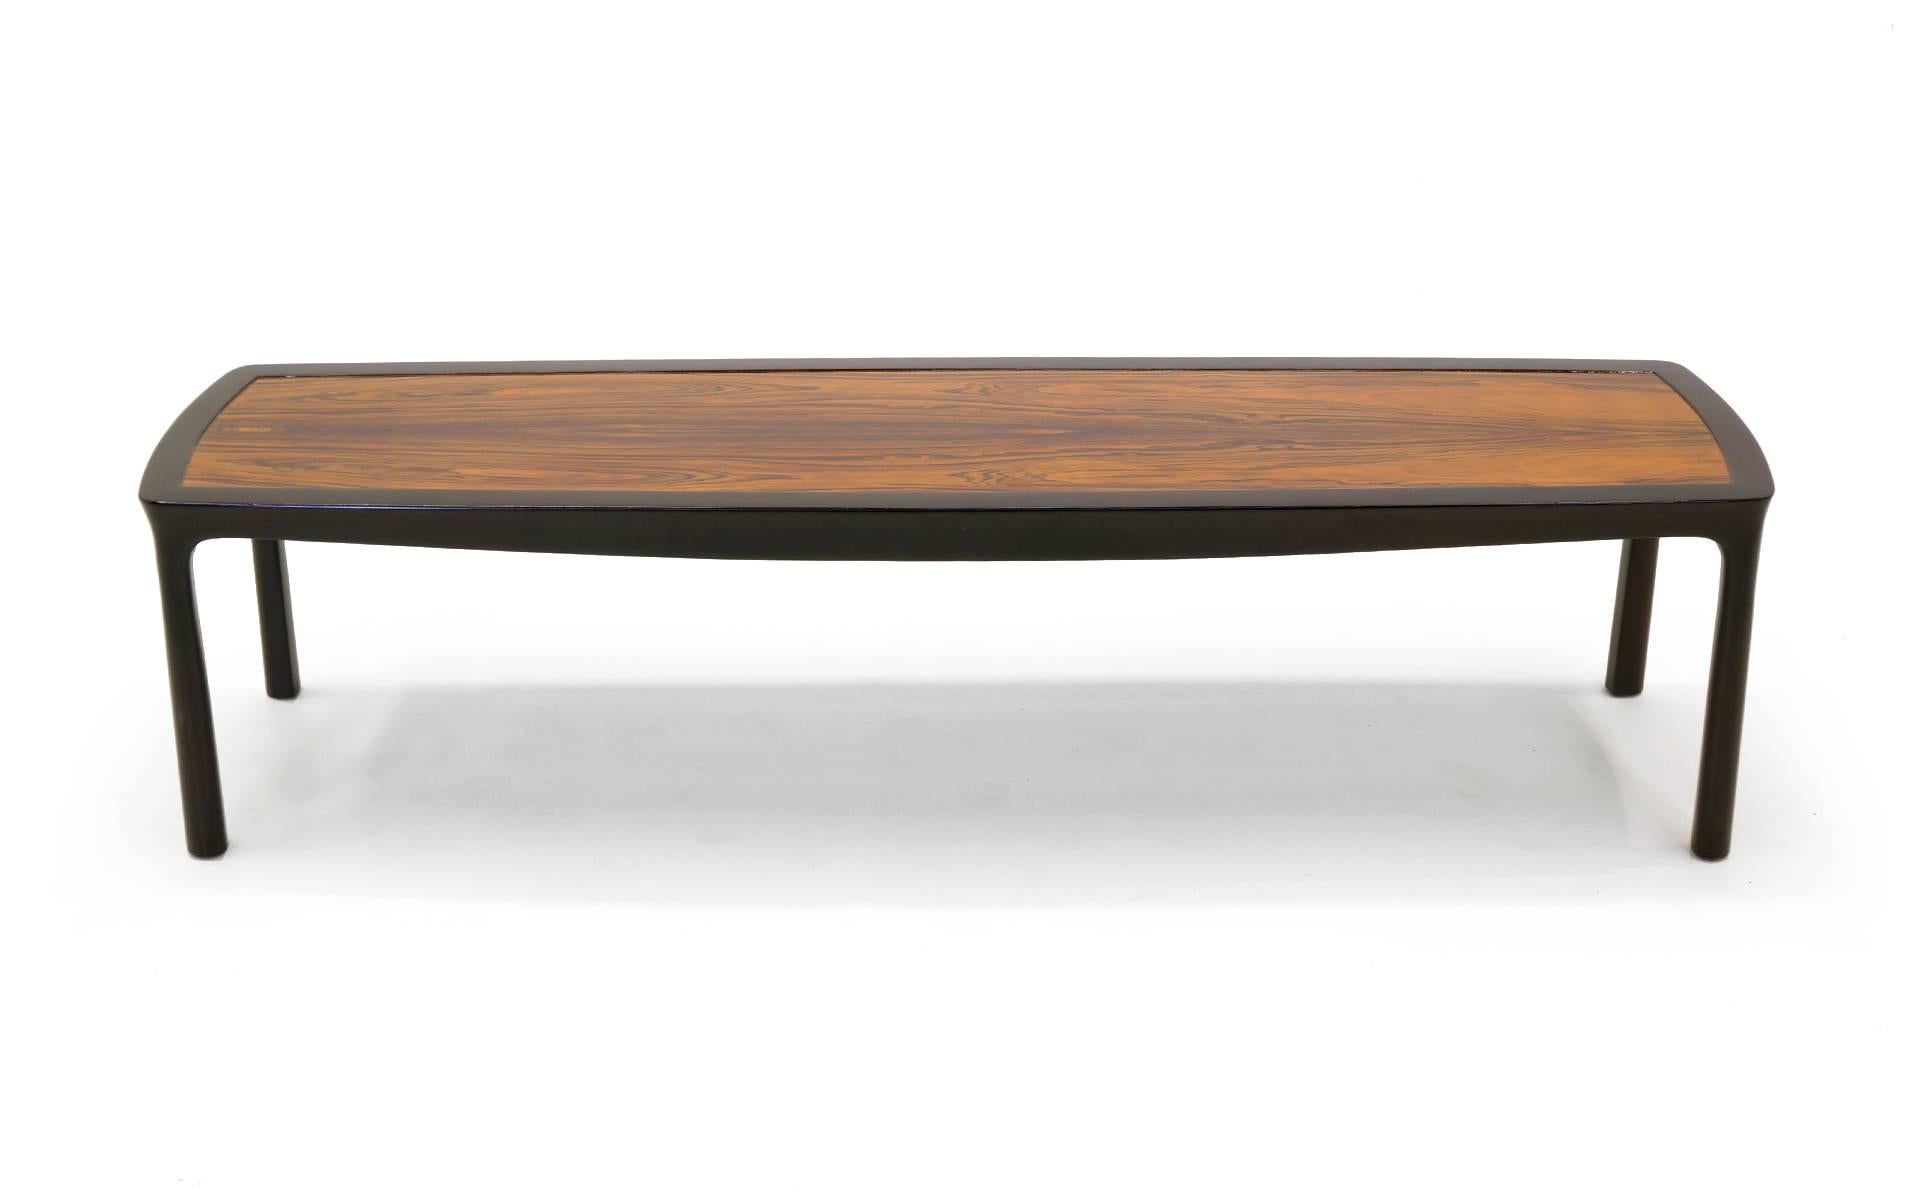 American Sculptured Edge Rectangular Coffee Table by Edward Wormley for Dunbar